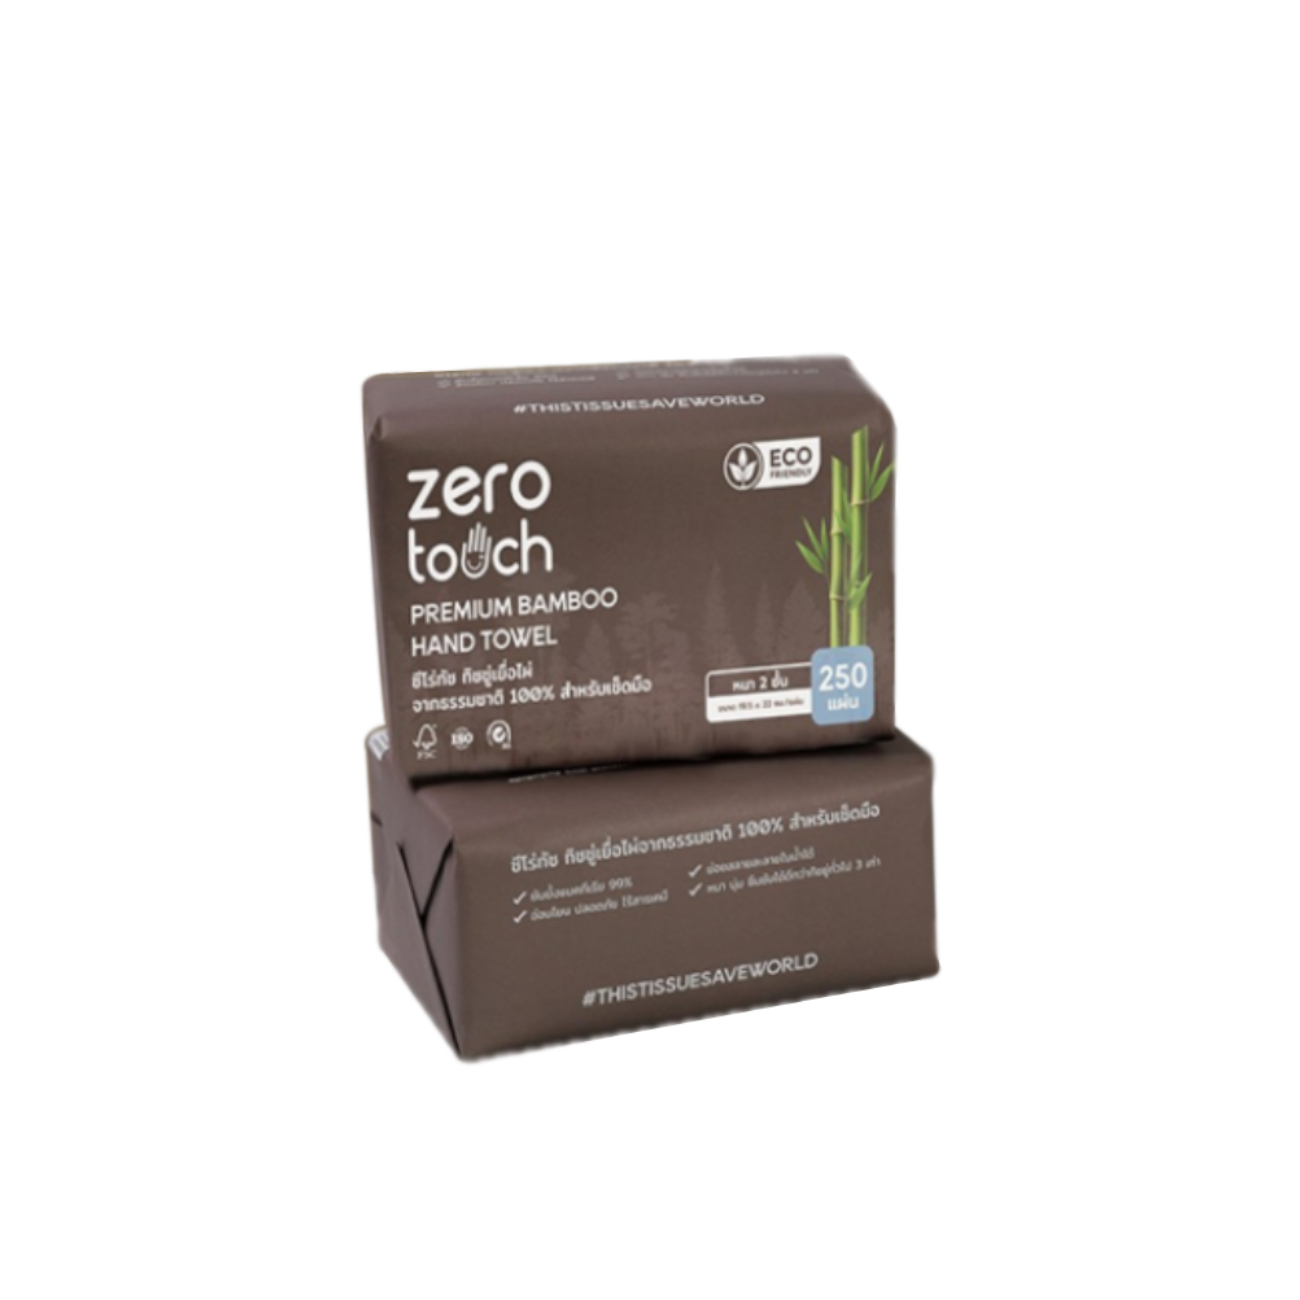 ZERO-TOUCH ทิชชู่เยื่อไผ่จากธรรมชาติ 100% สำหรับเช็ดมือ (ราคาต่อลัง, 24 ห่อ/กล่อง)